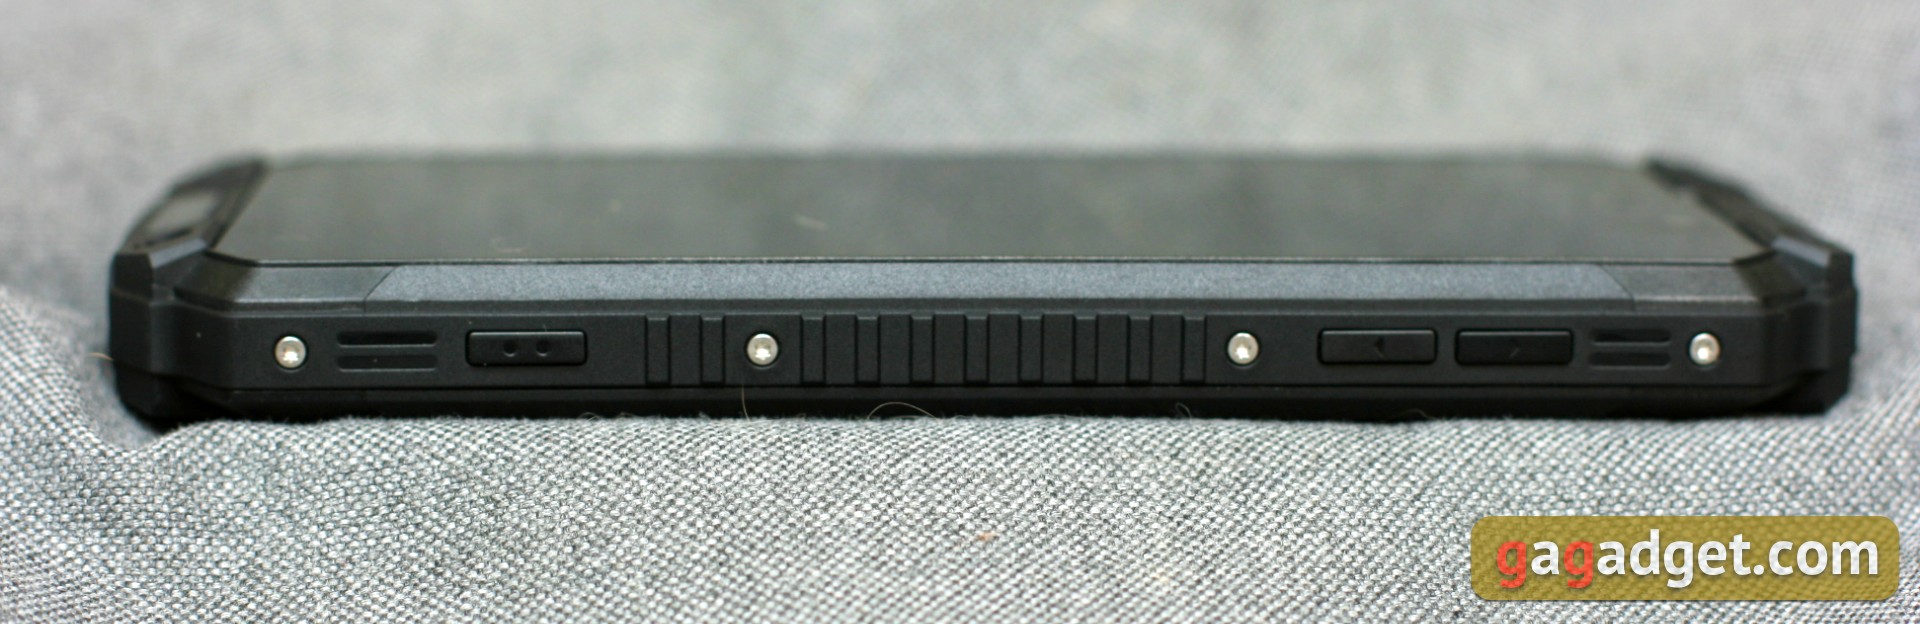 Обзор Sigma Mobile X-treme PQ39 MAX: современный защищённый батарейкофон-10